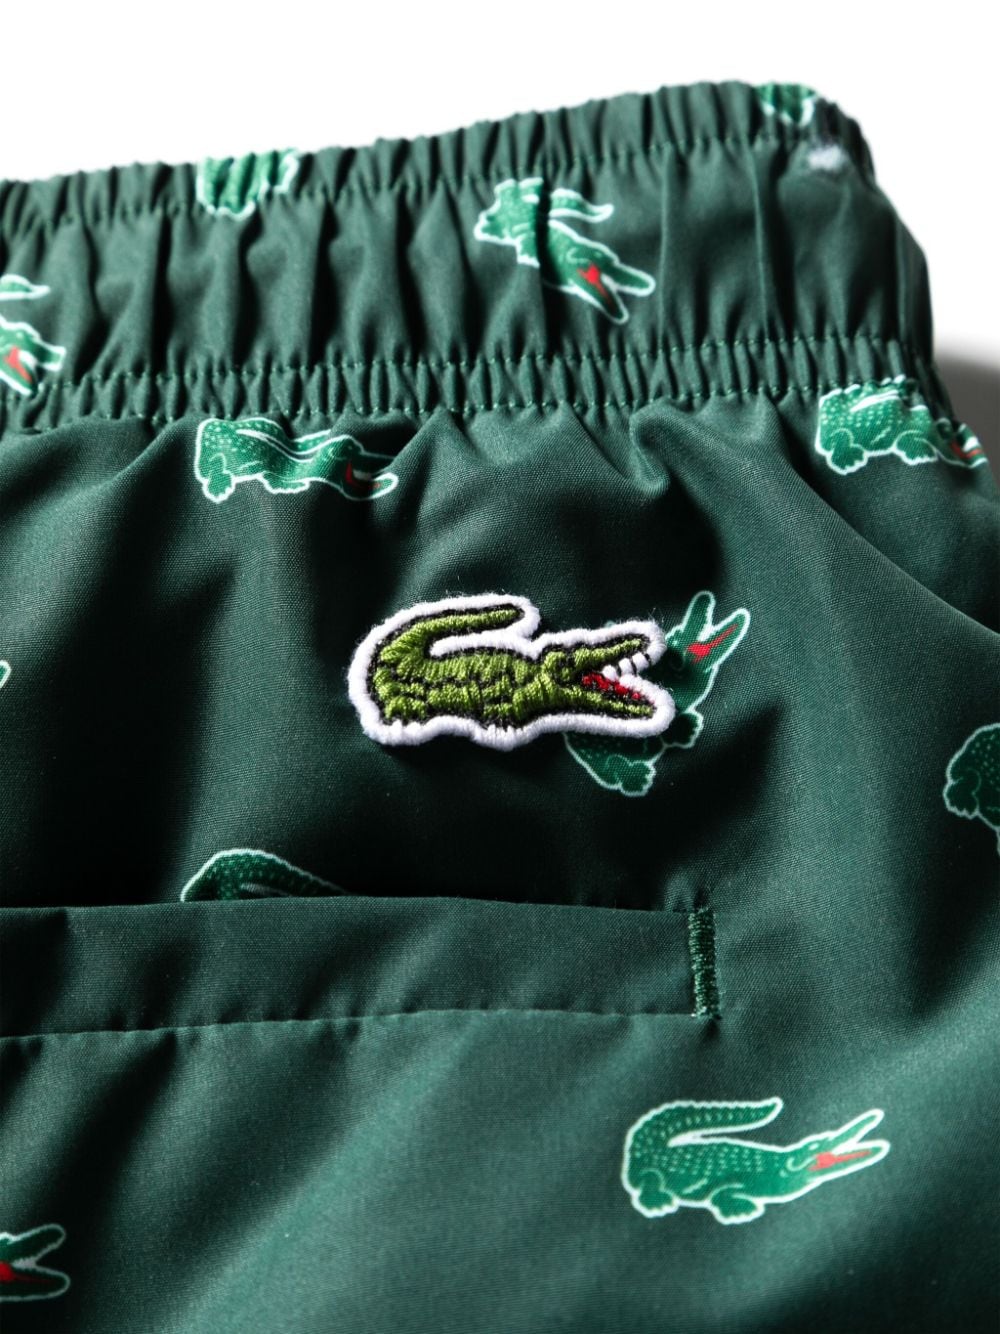 Green Crocodile-print drawstring swim shorts<BR/><BR/><BR/><BR/>